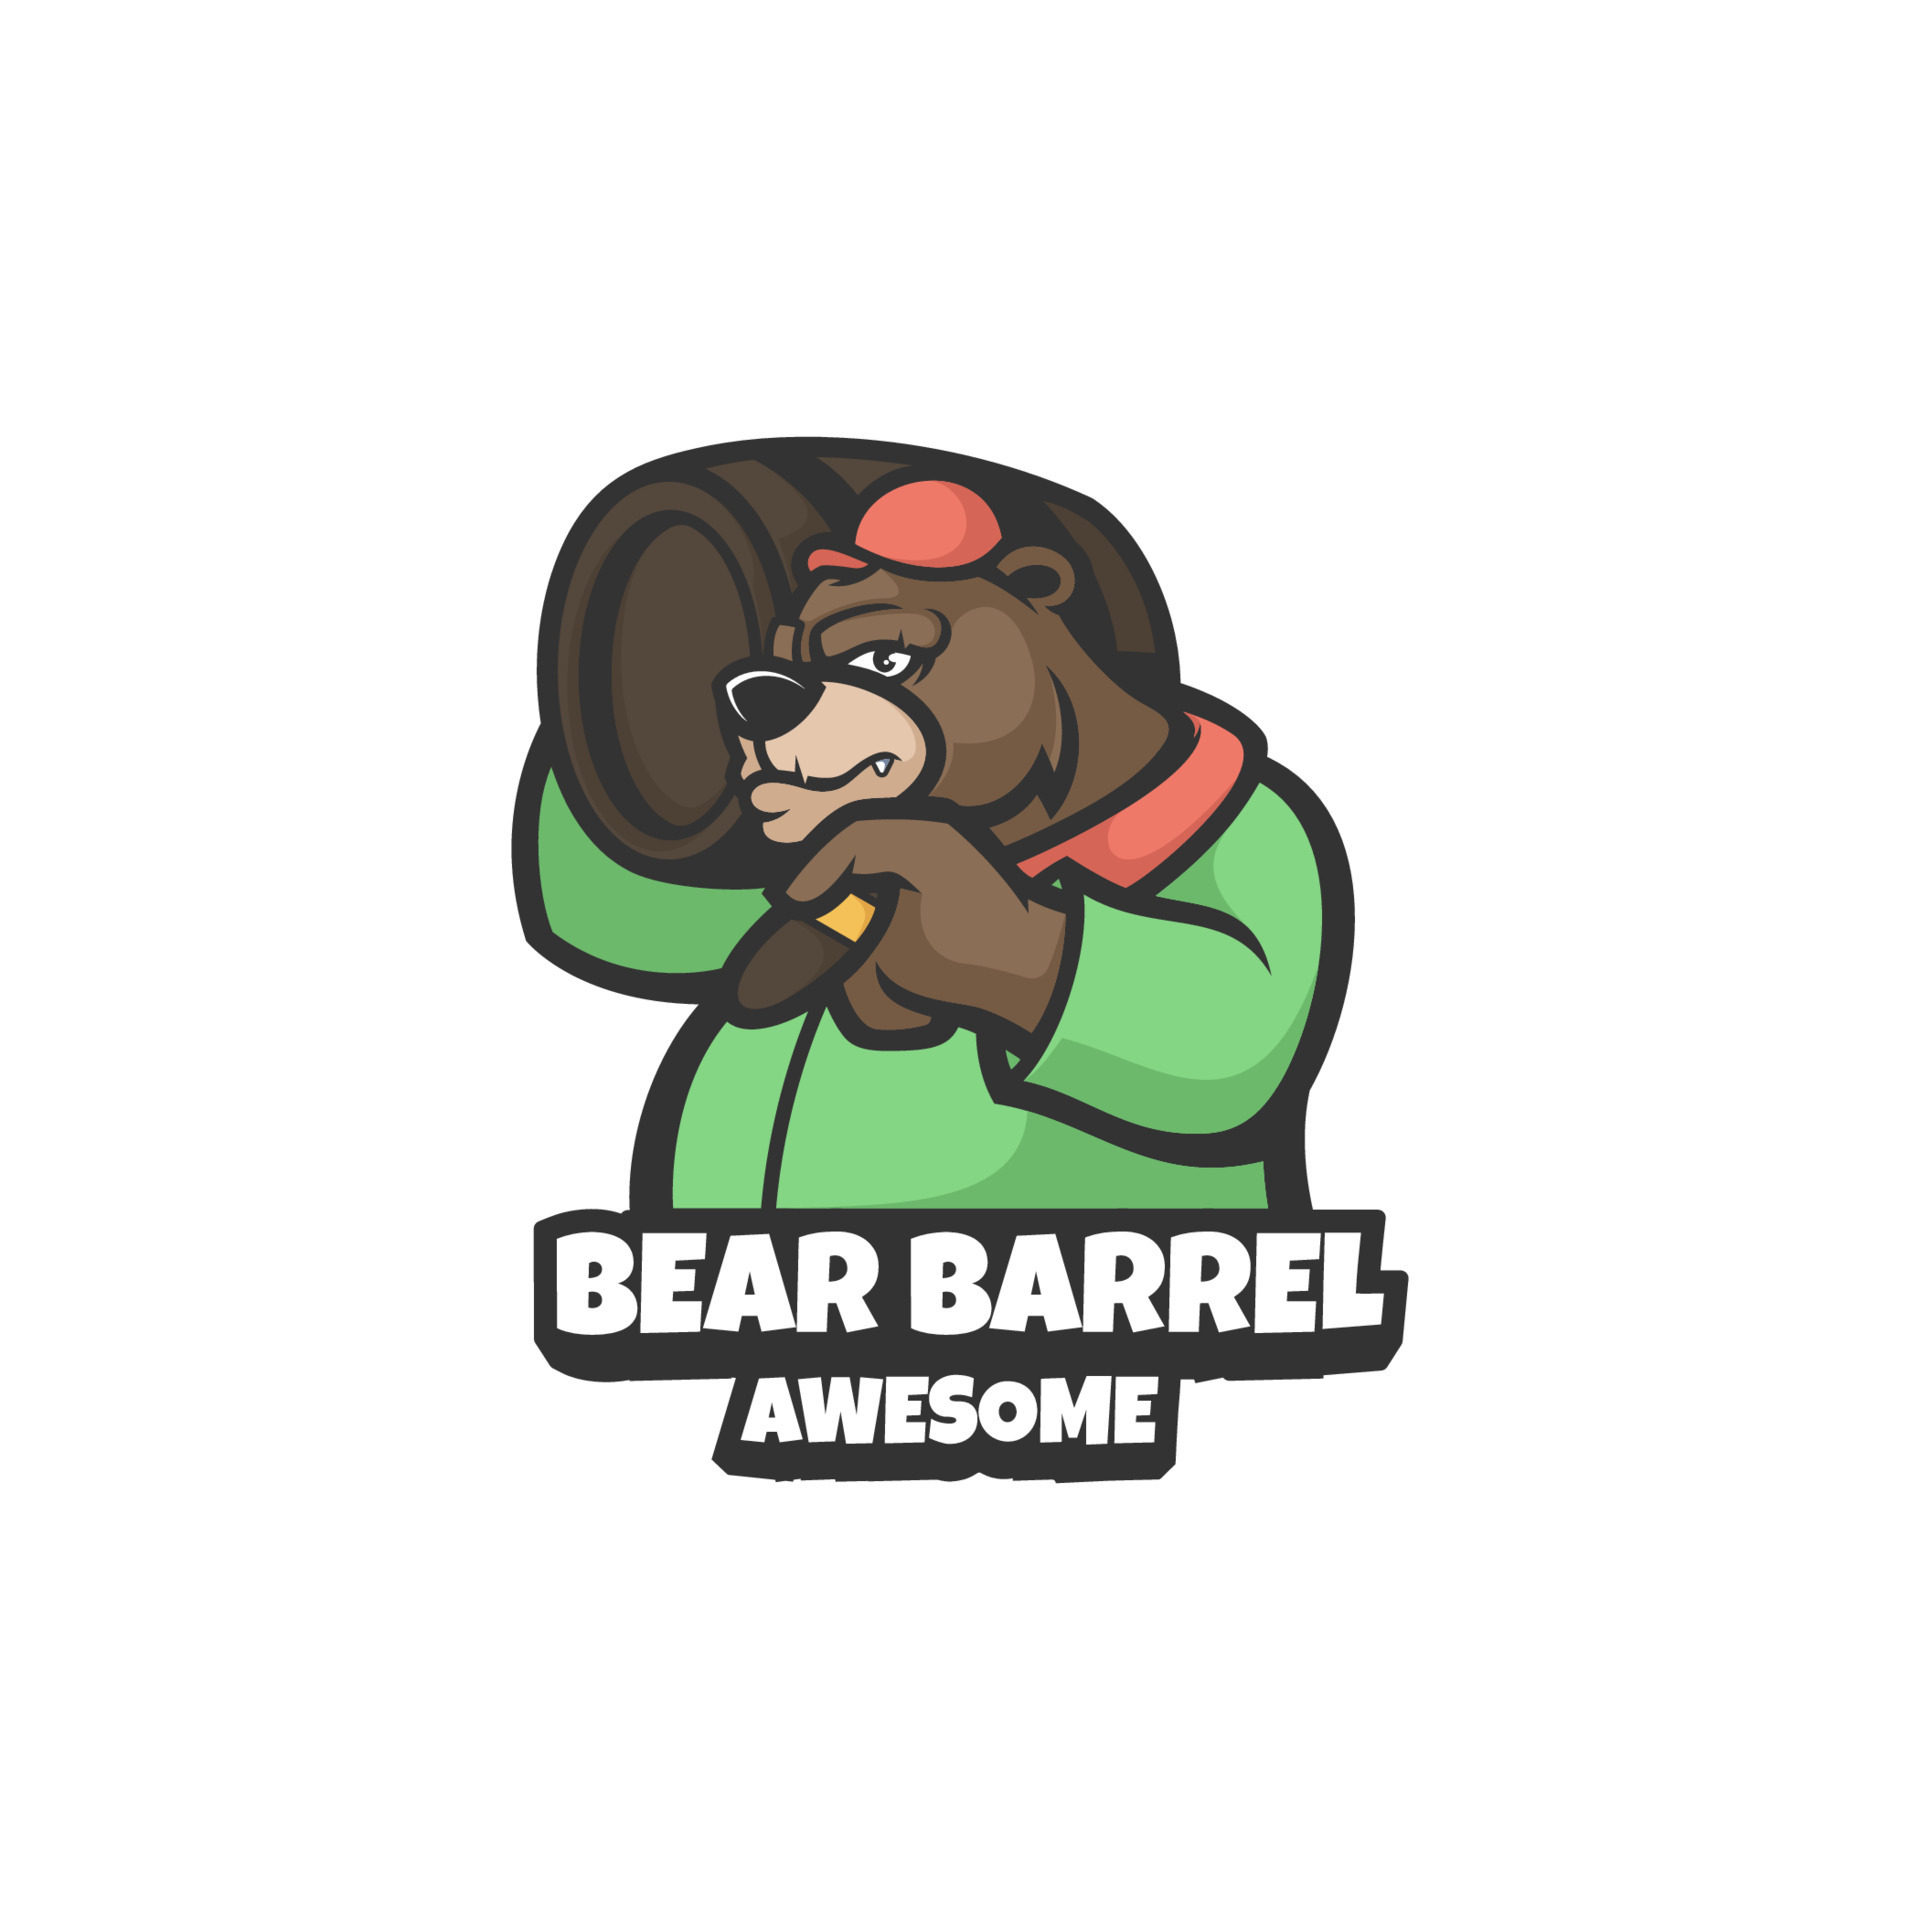 Illustration vector graphic of Bear Barrel, good for logo design